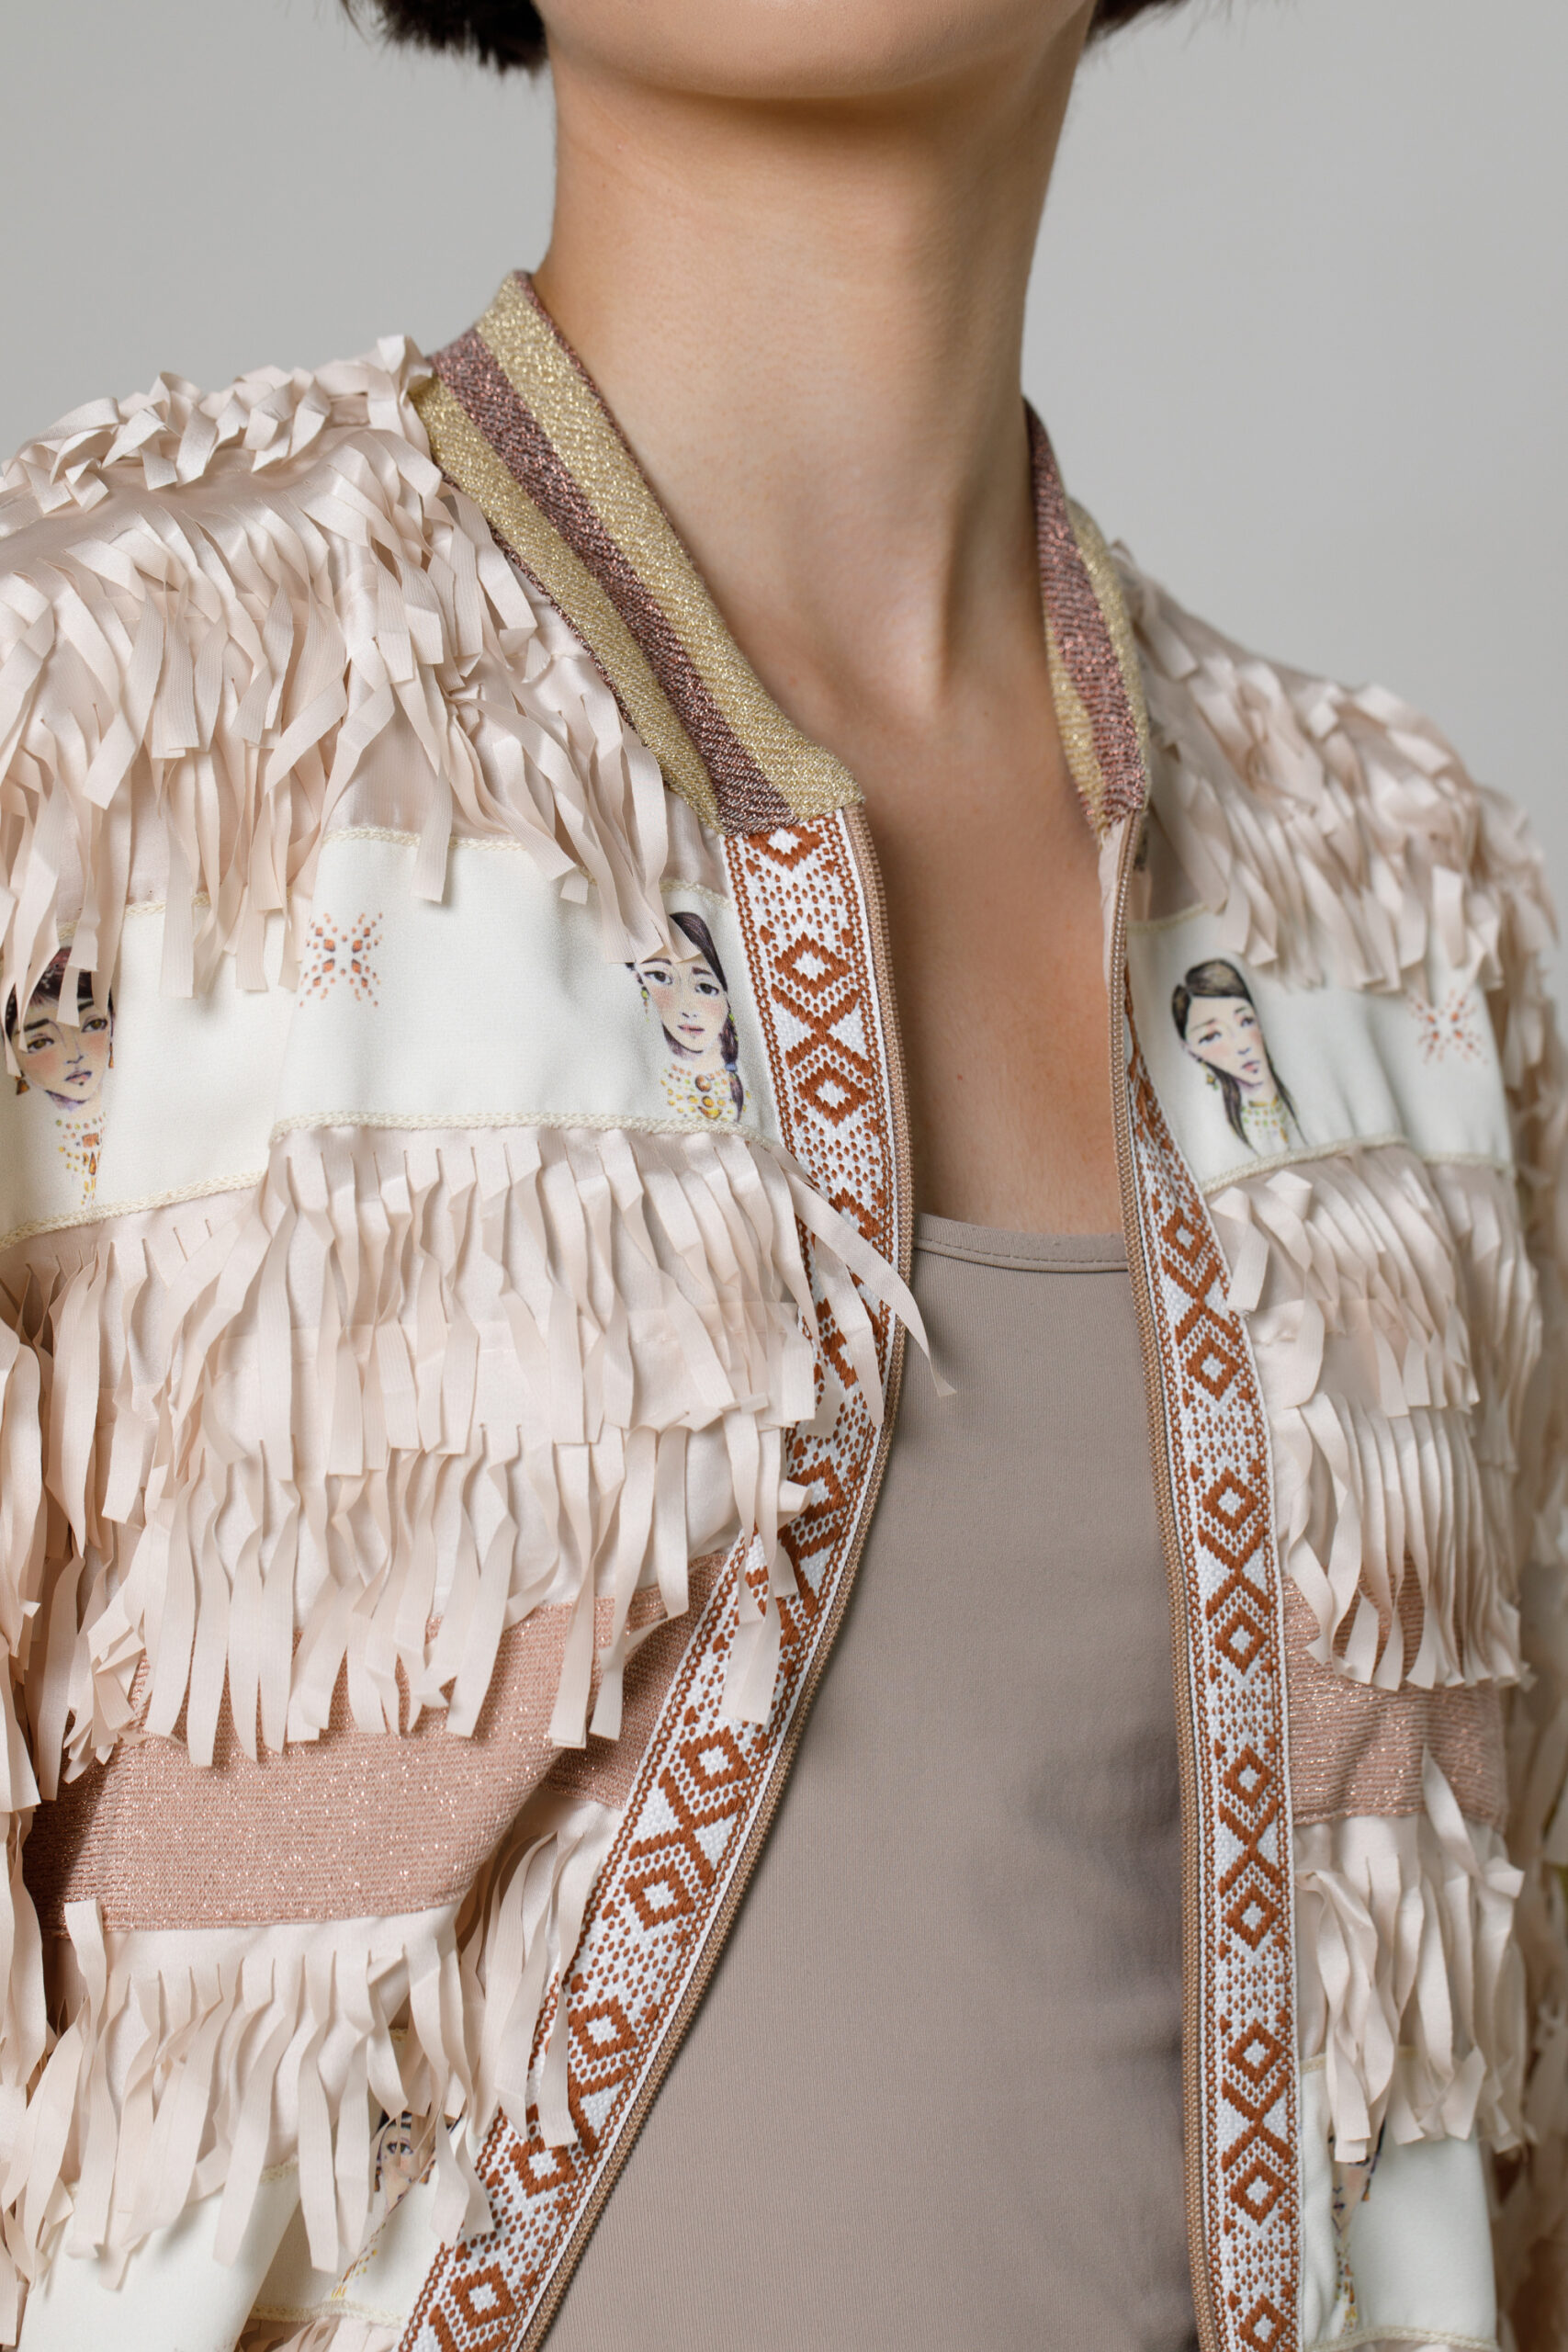 NIABI satin jacket with fringes. Natural fabrics, original design, handmade embroidery